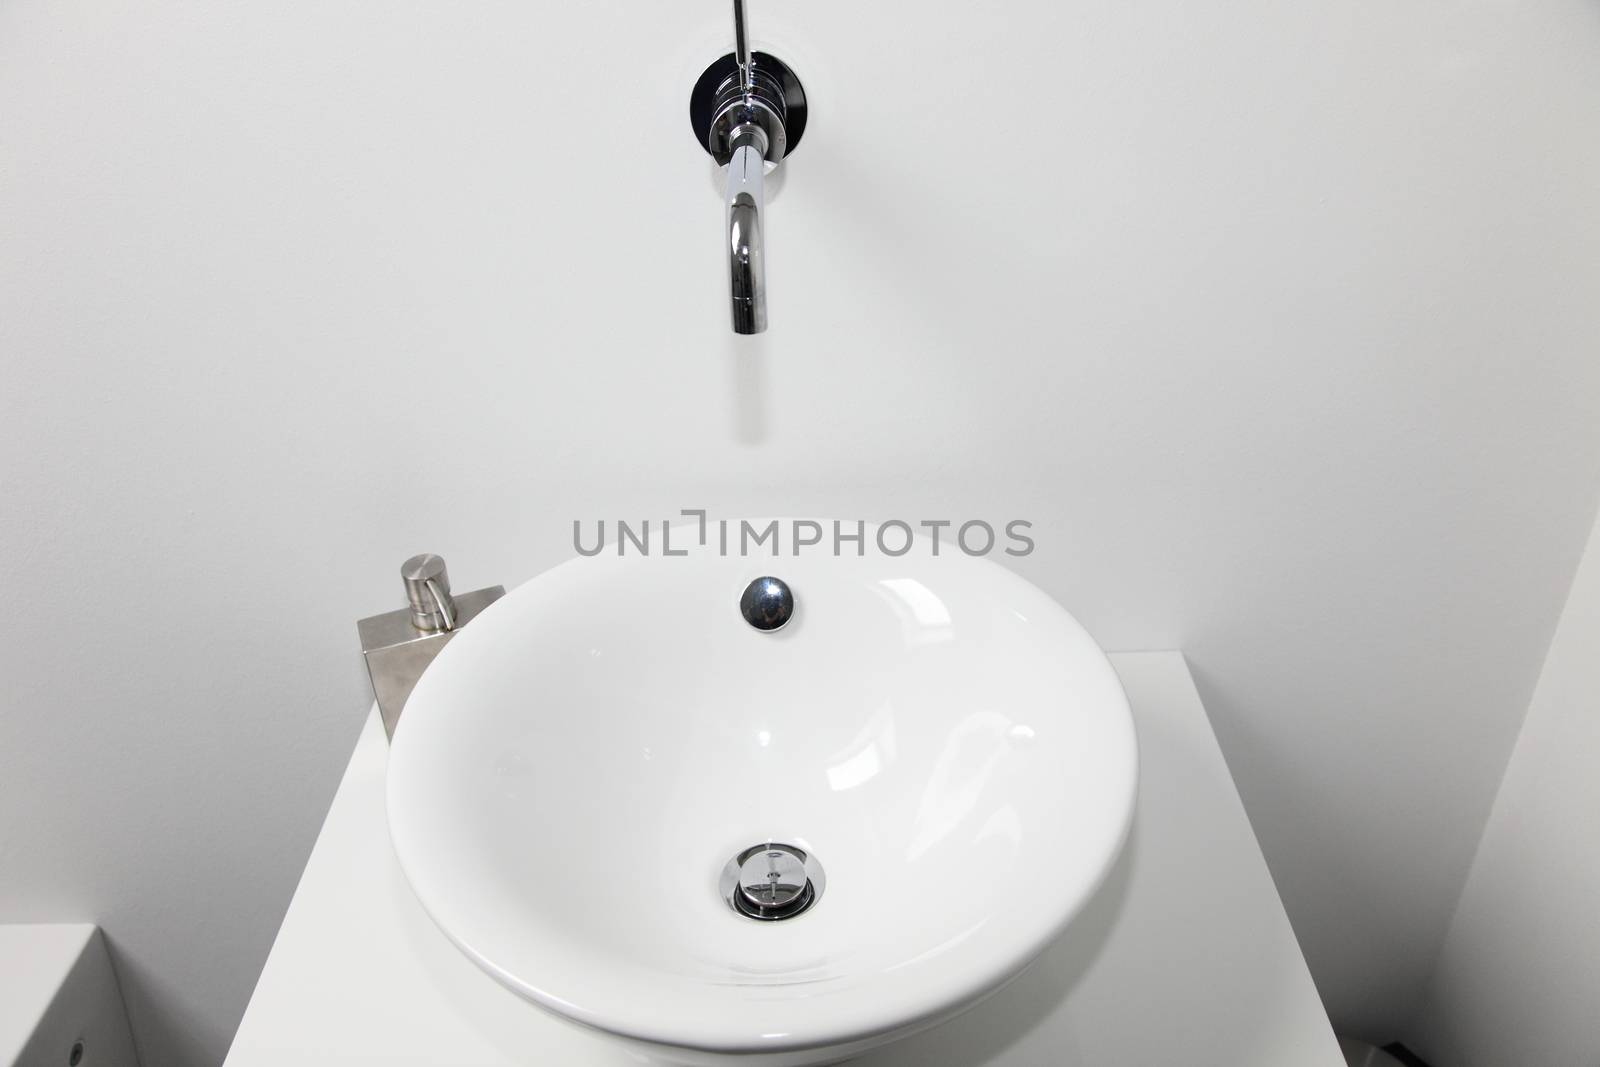 Closeup view of a modern circular ceramic handbasin and wall mounted tap in a bathroom